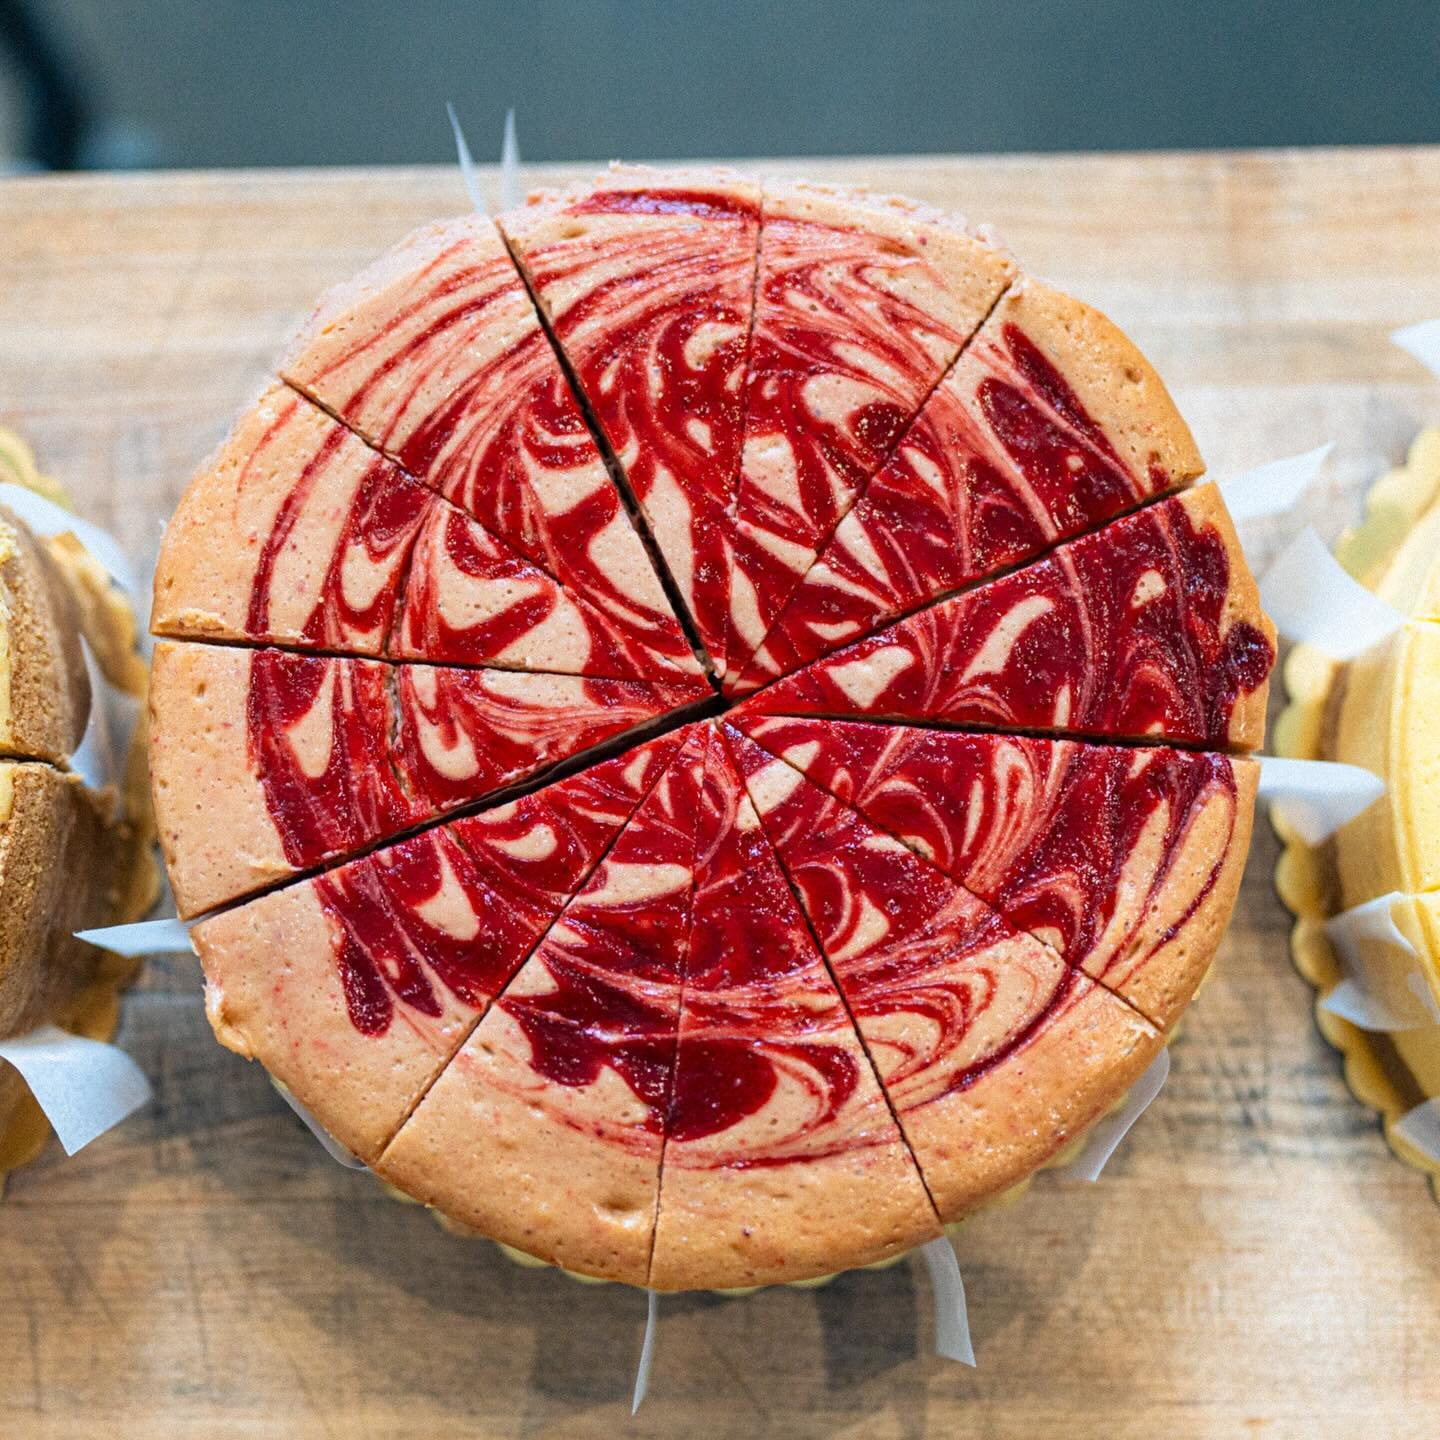 🍓🍰 Strawberry Shortcake! 🍰 🍓

#cheesecake #dessert #strawberry #shortcake #bakery #baked #columbus #ohio #eatlocal #foodie #columbuseats #yummy